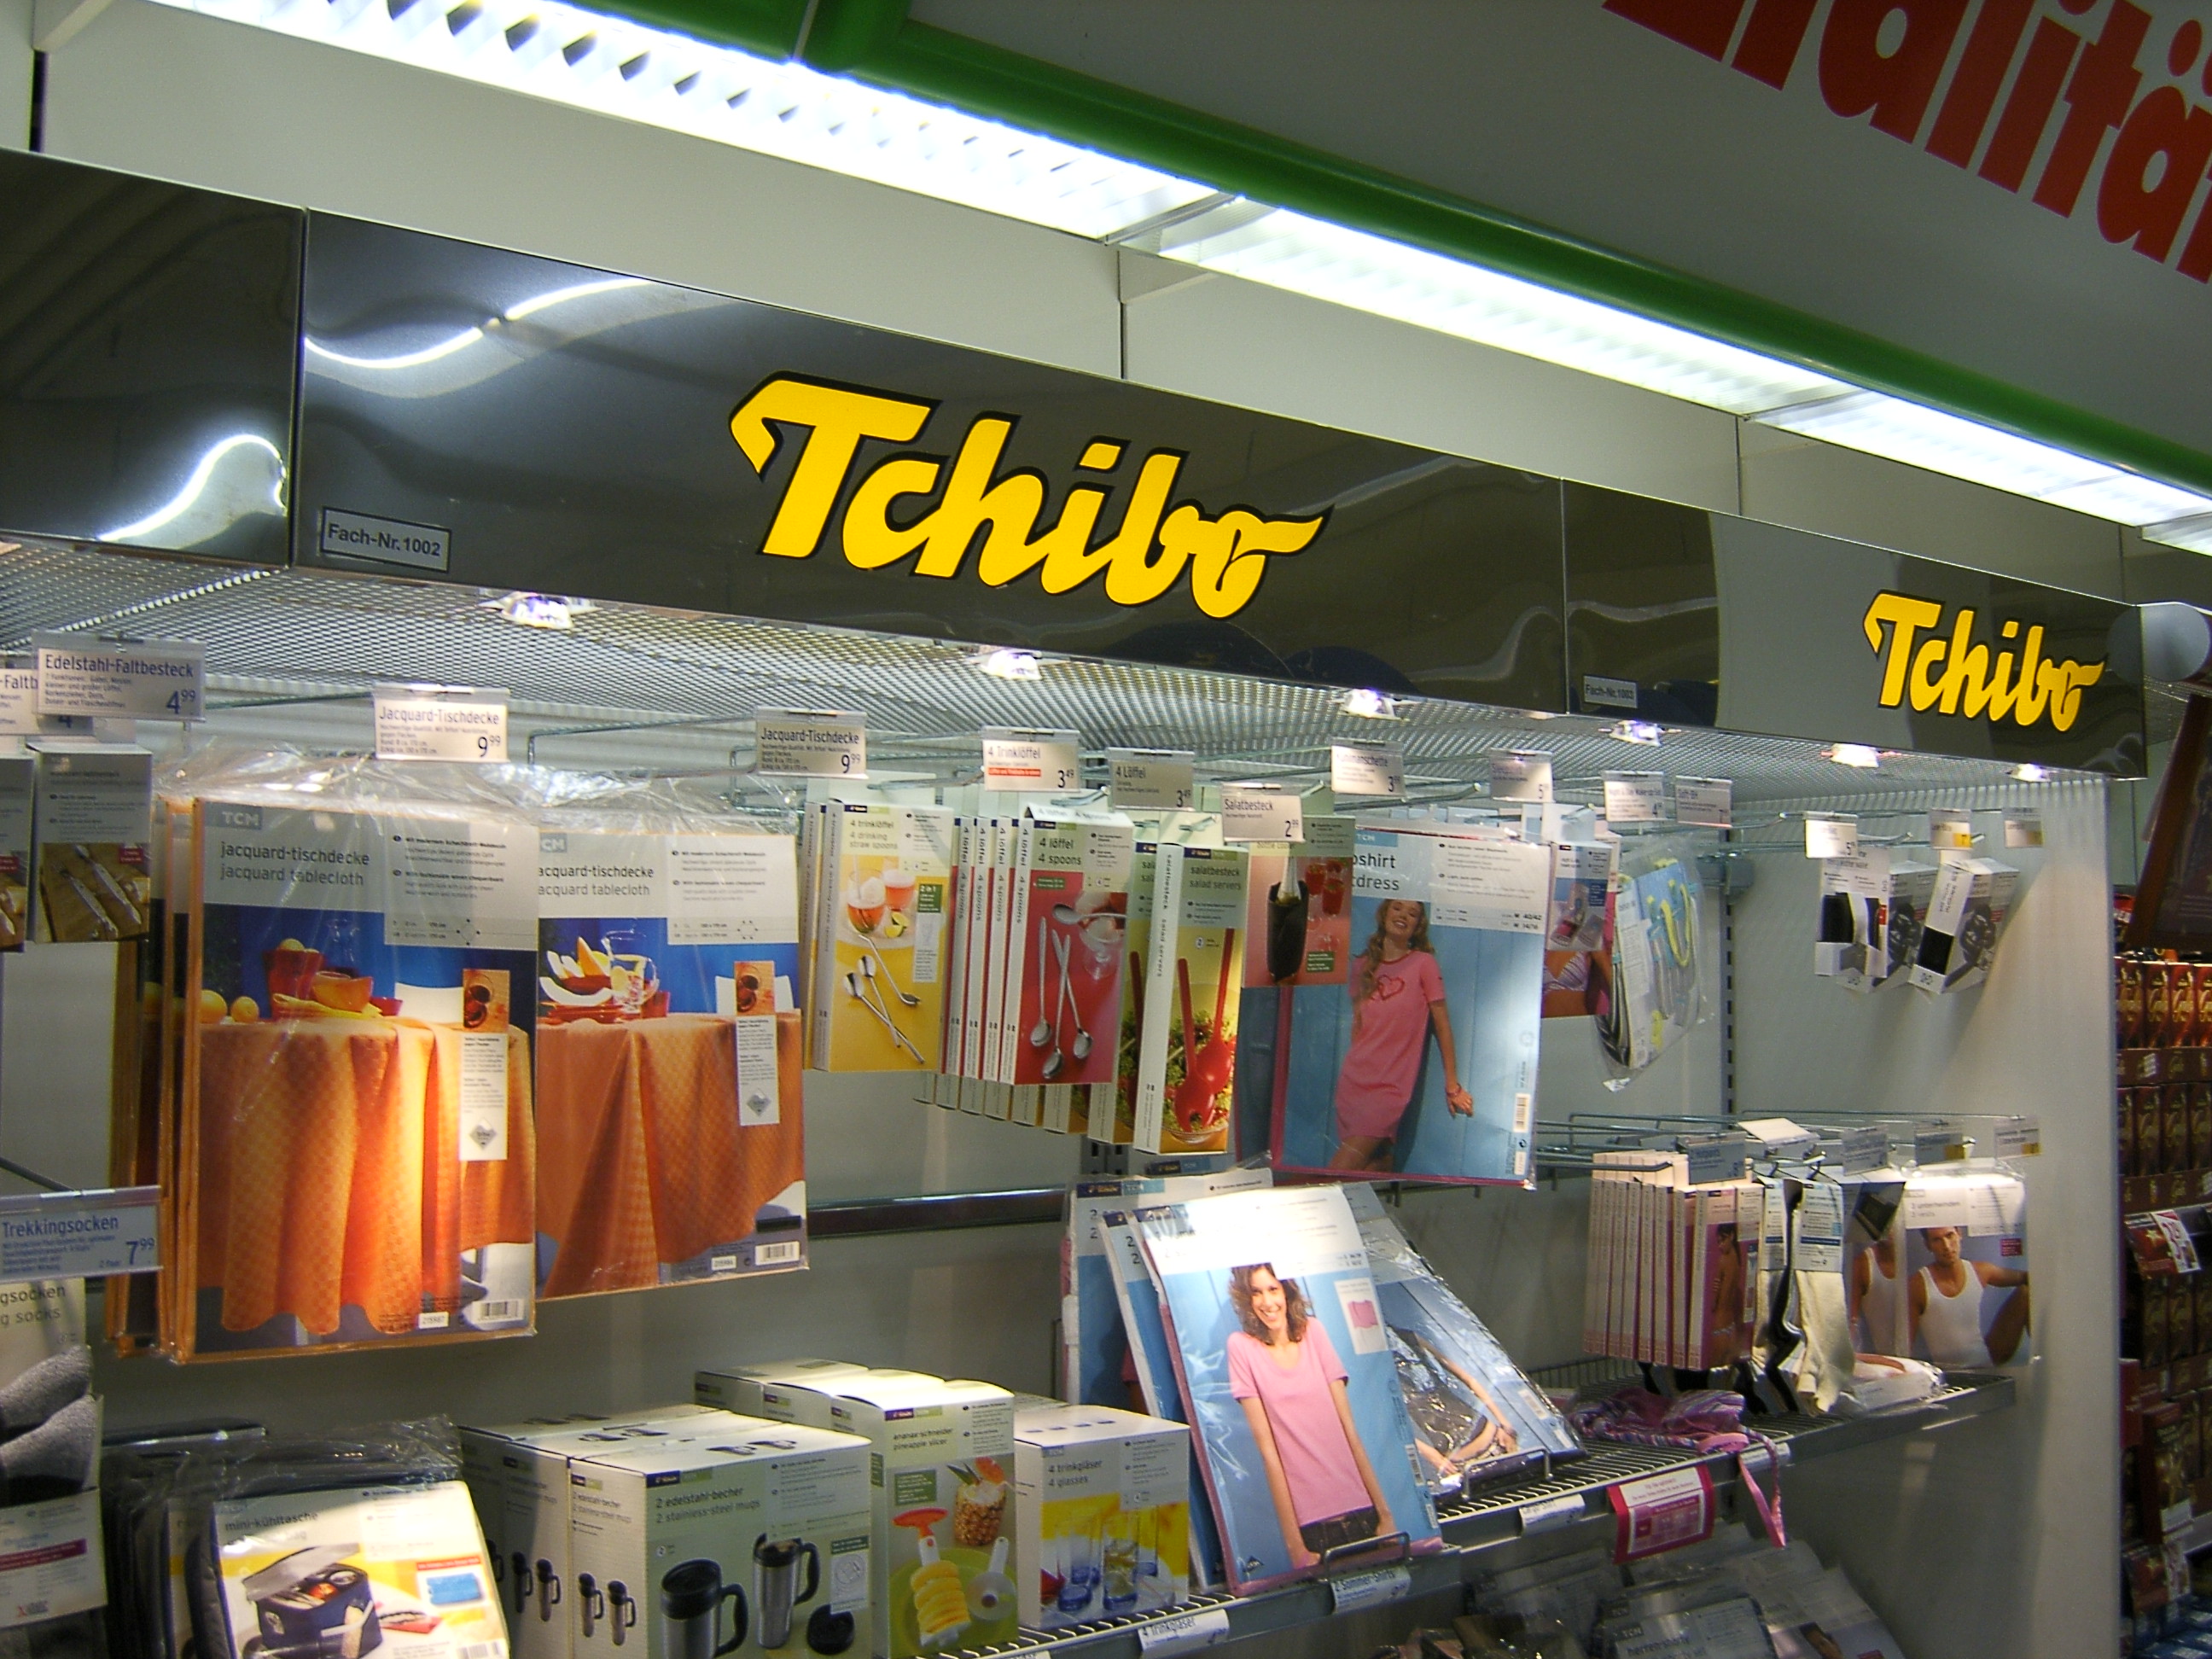 File:Tchibo shop.jpg - Wikimedia Commons